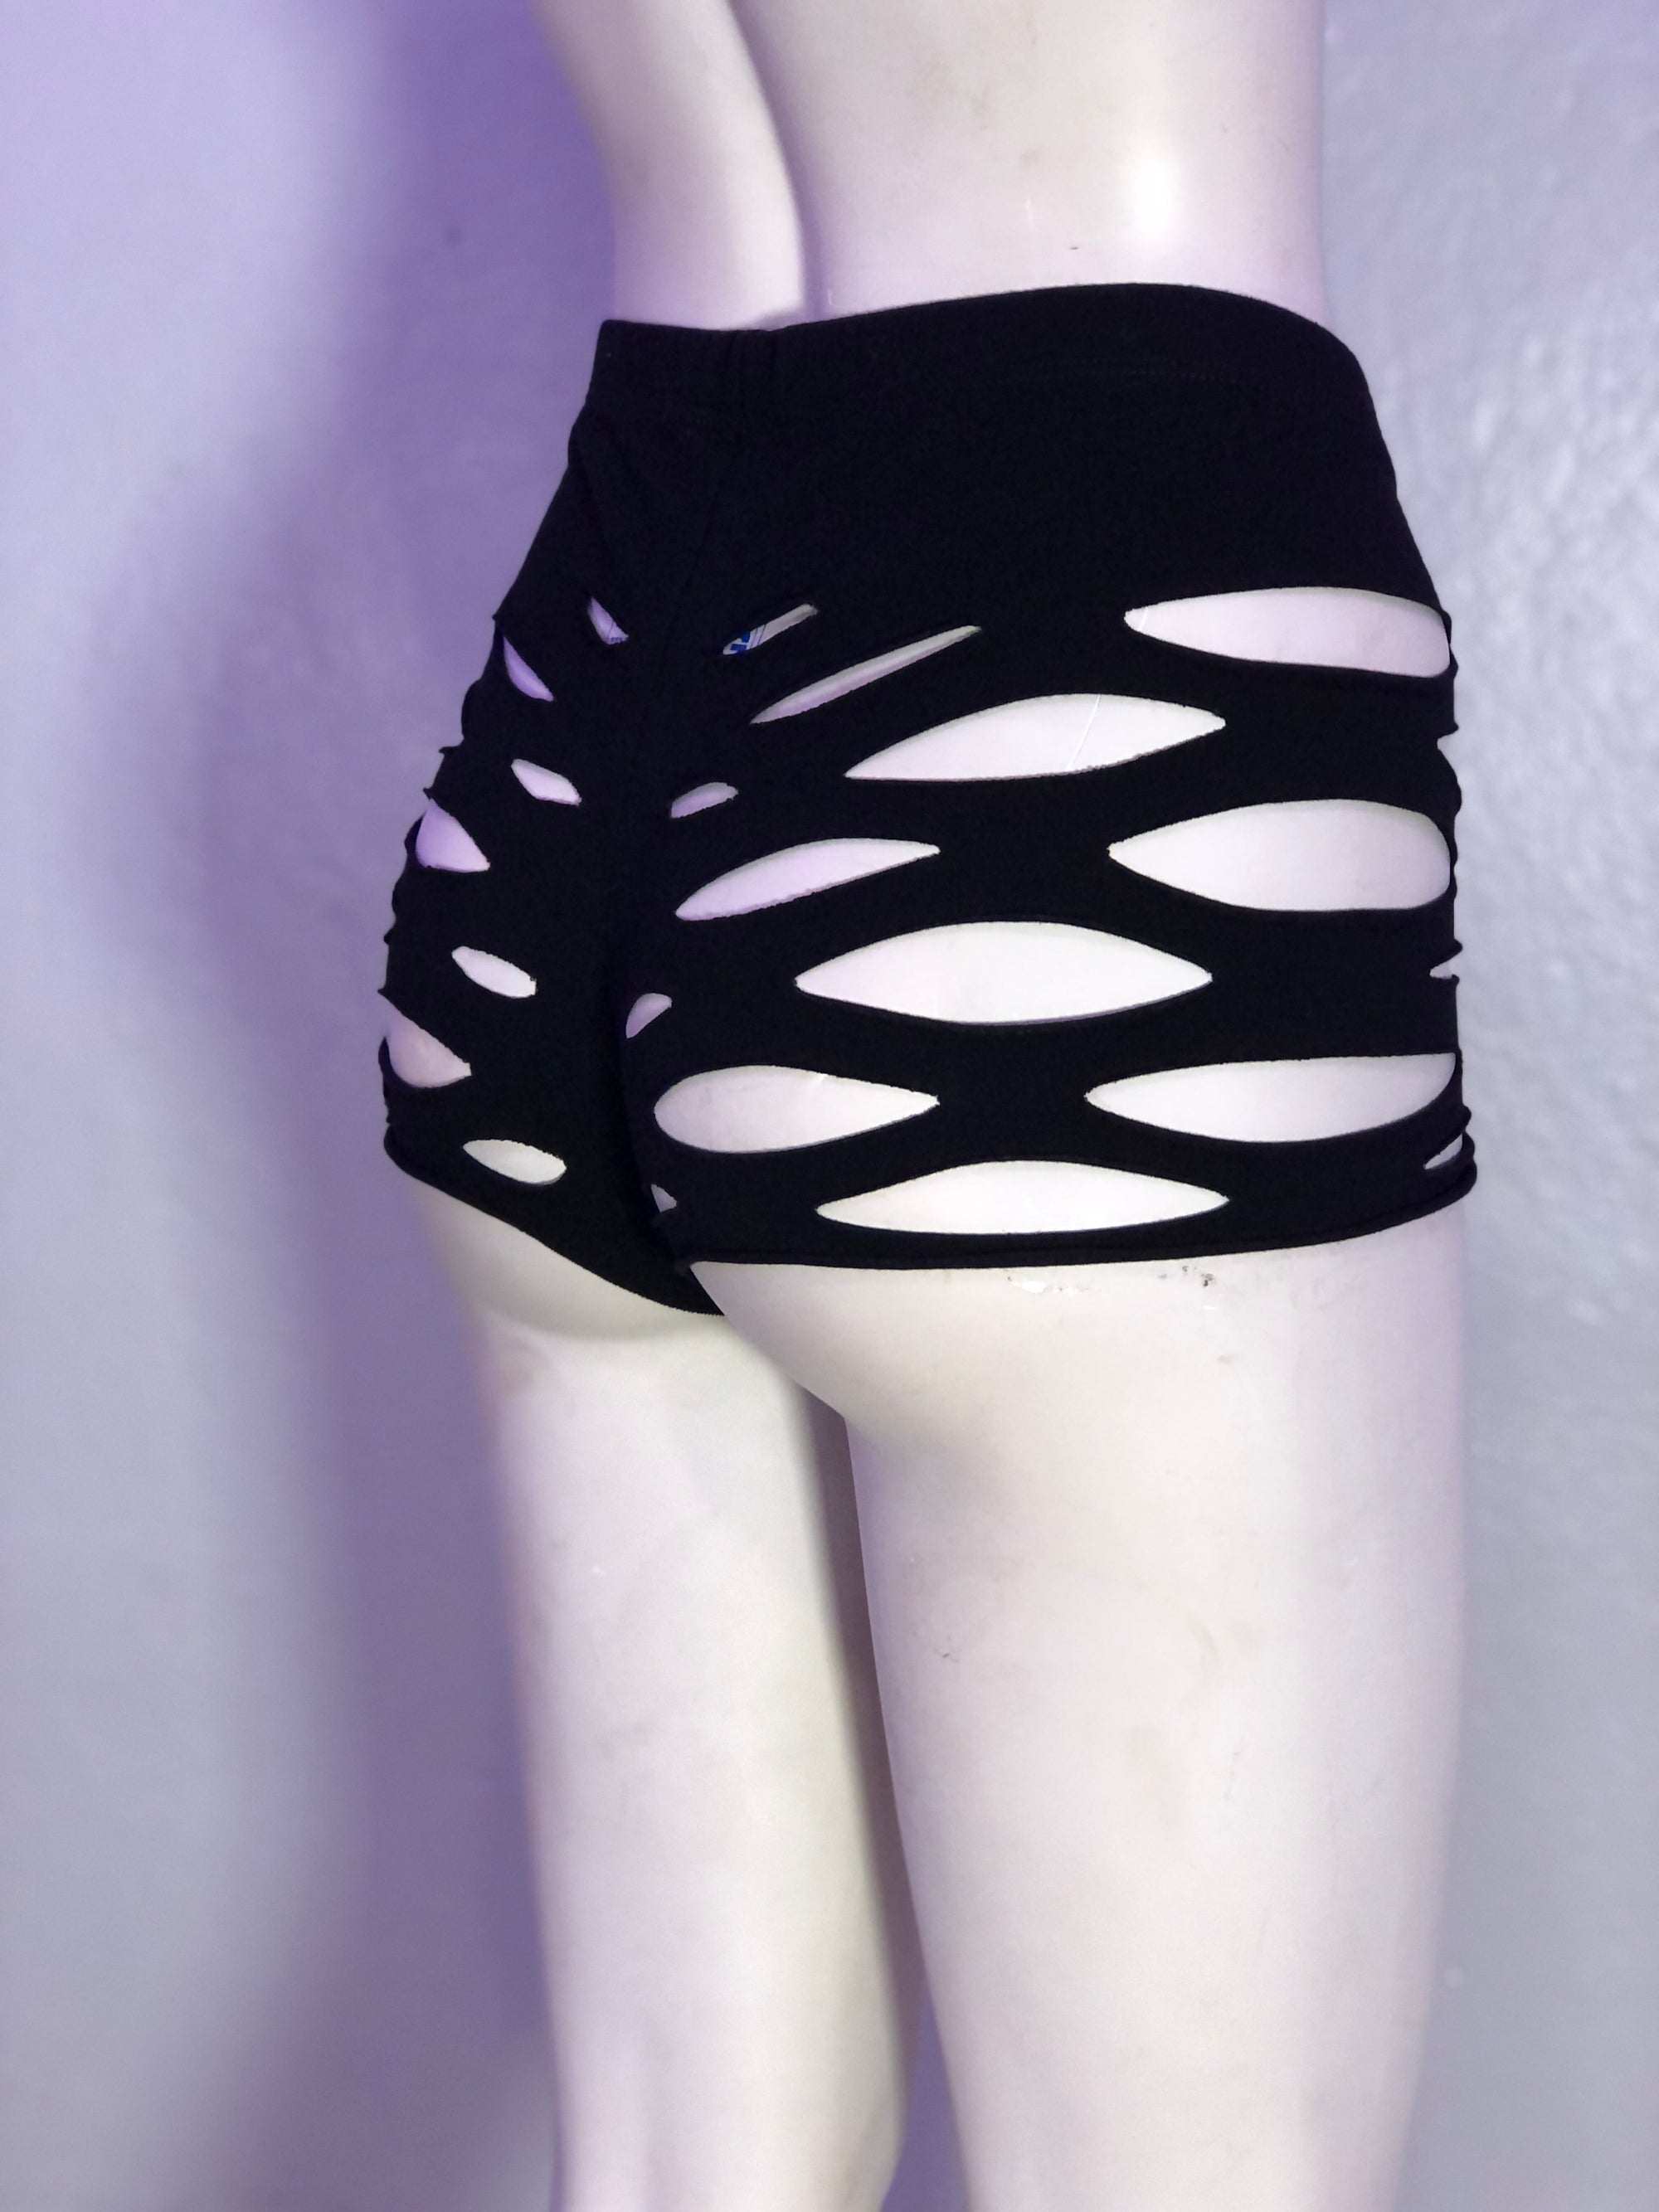 Sexy Sliced Net Shorts